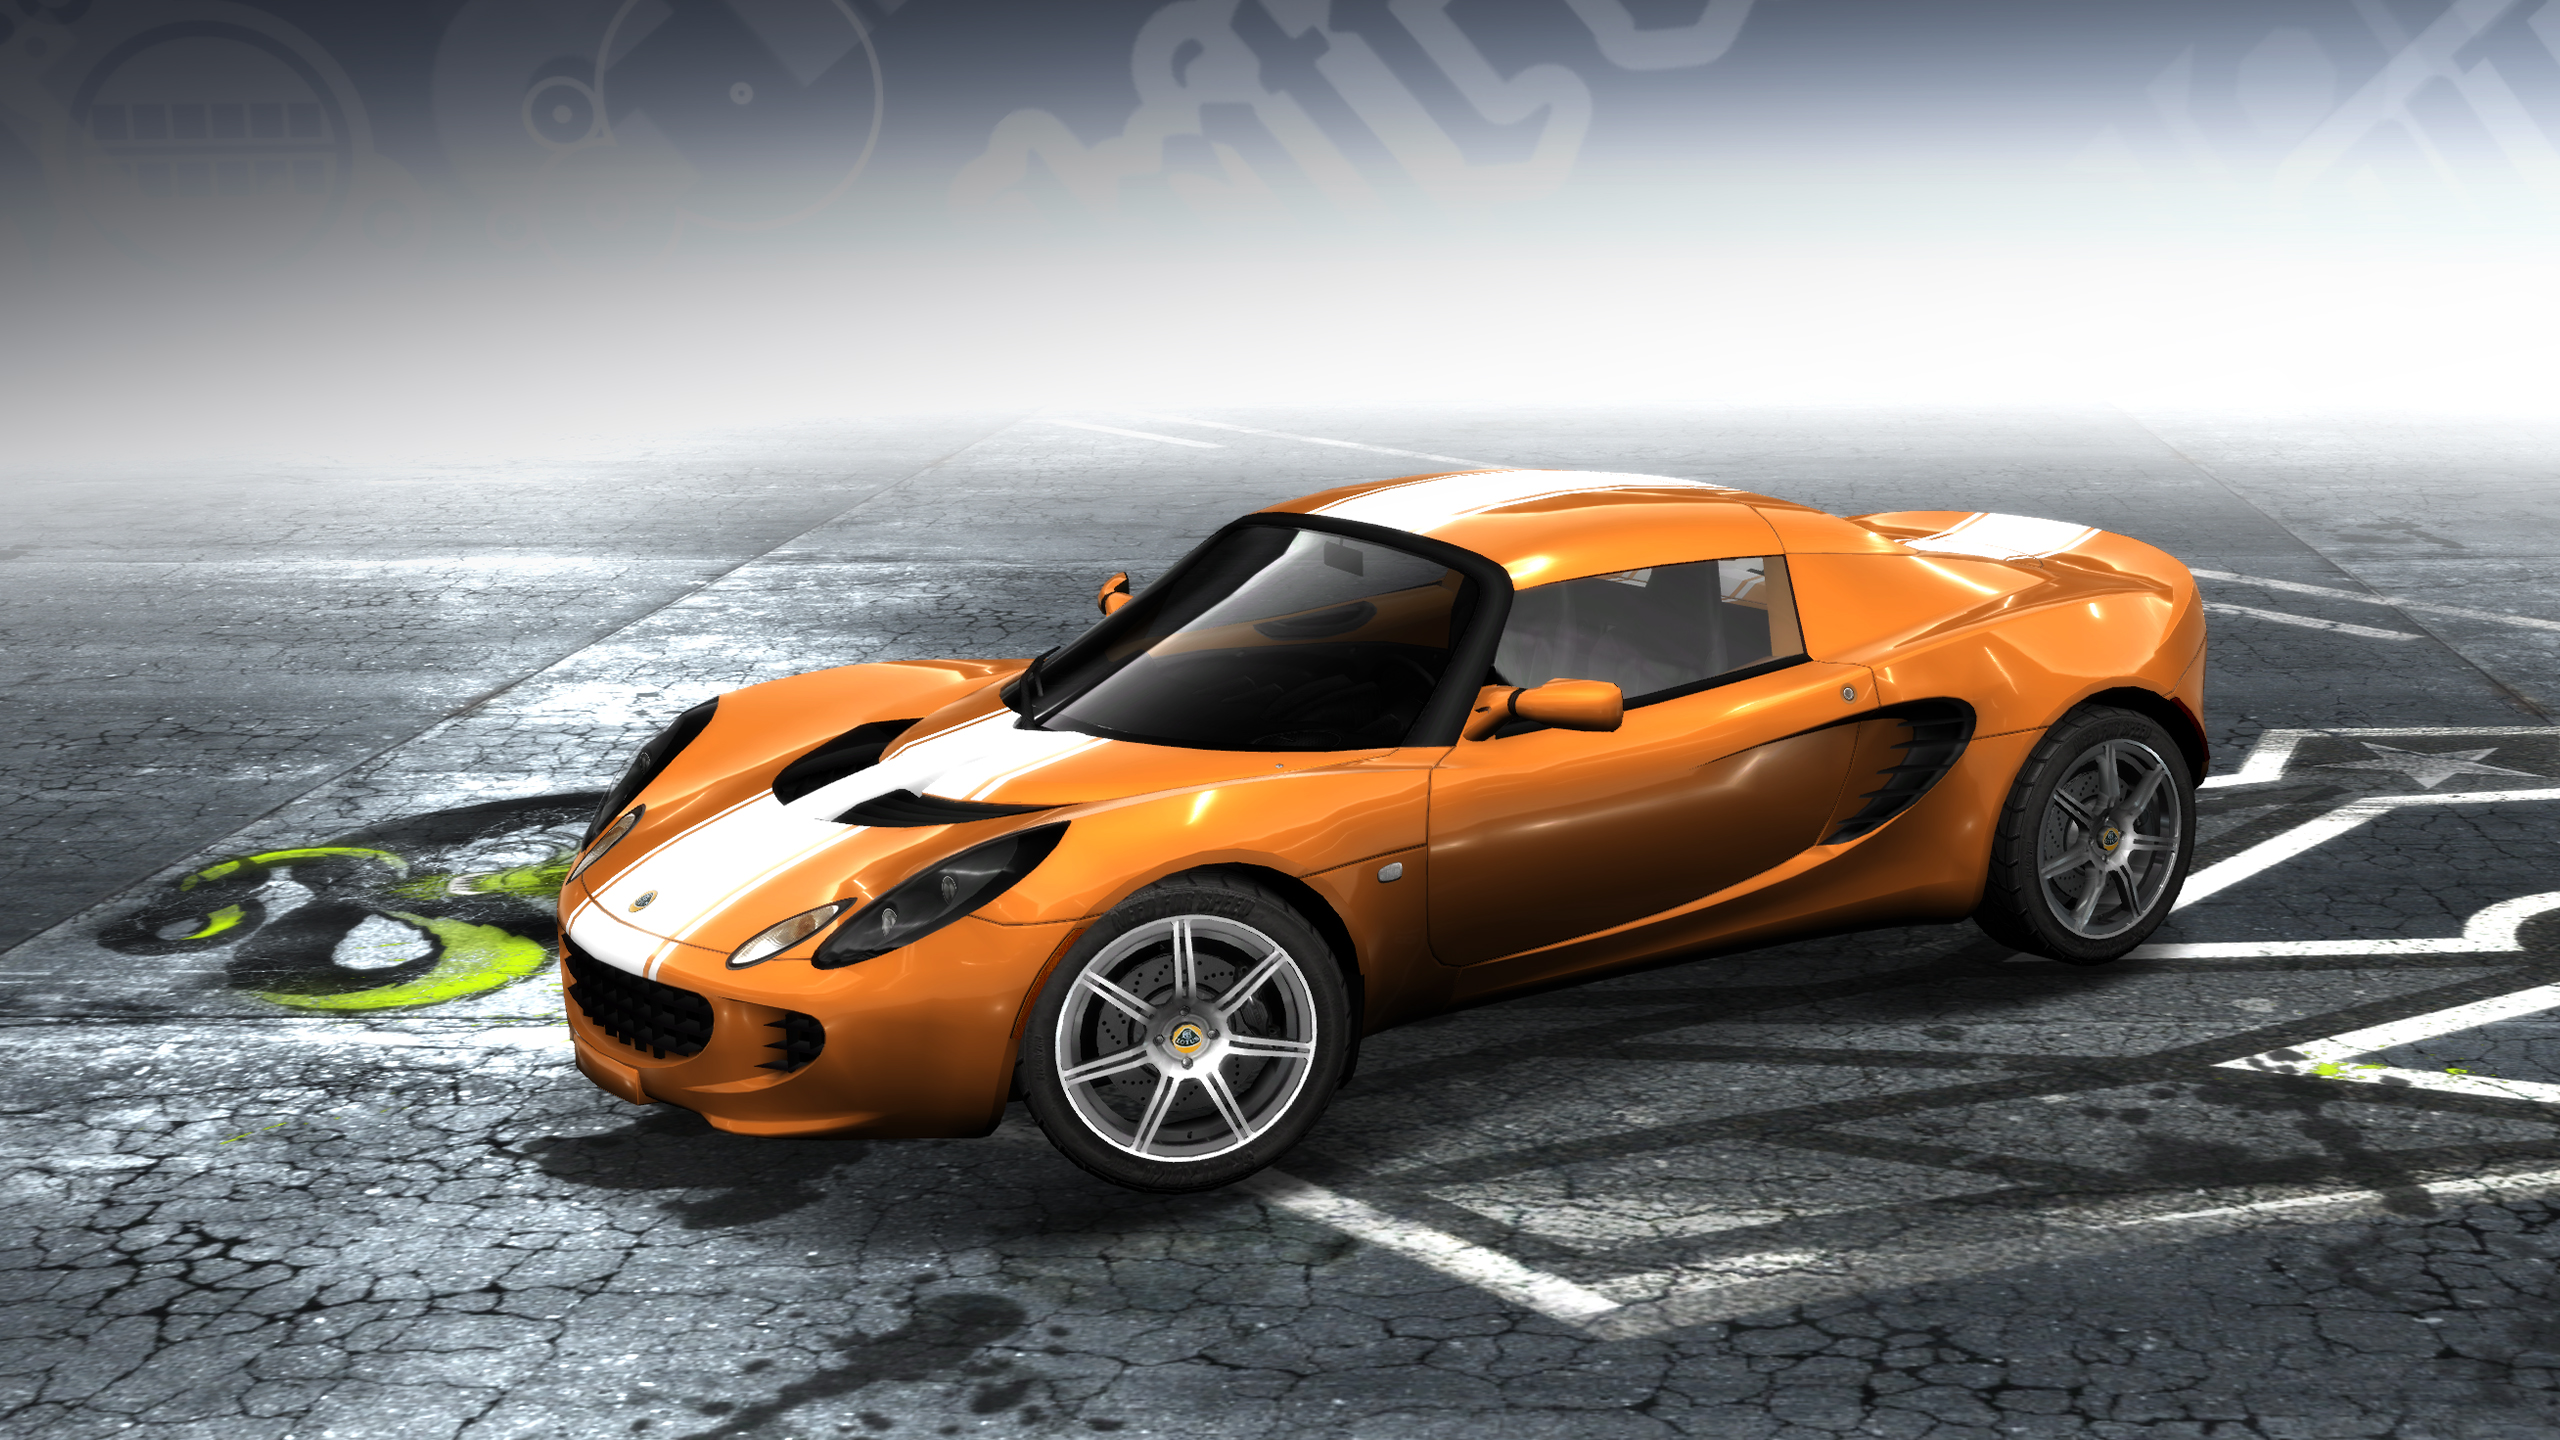 Lotus Elise 111R | Need for Speed Wiki | Fandom